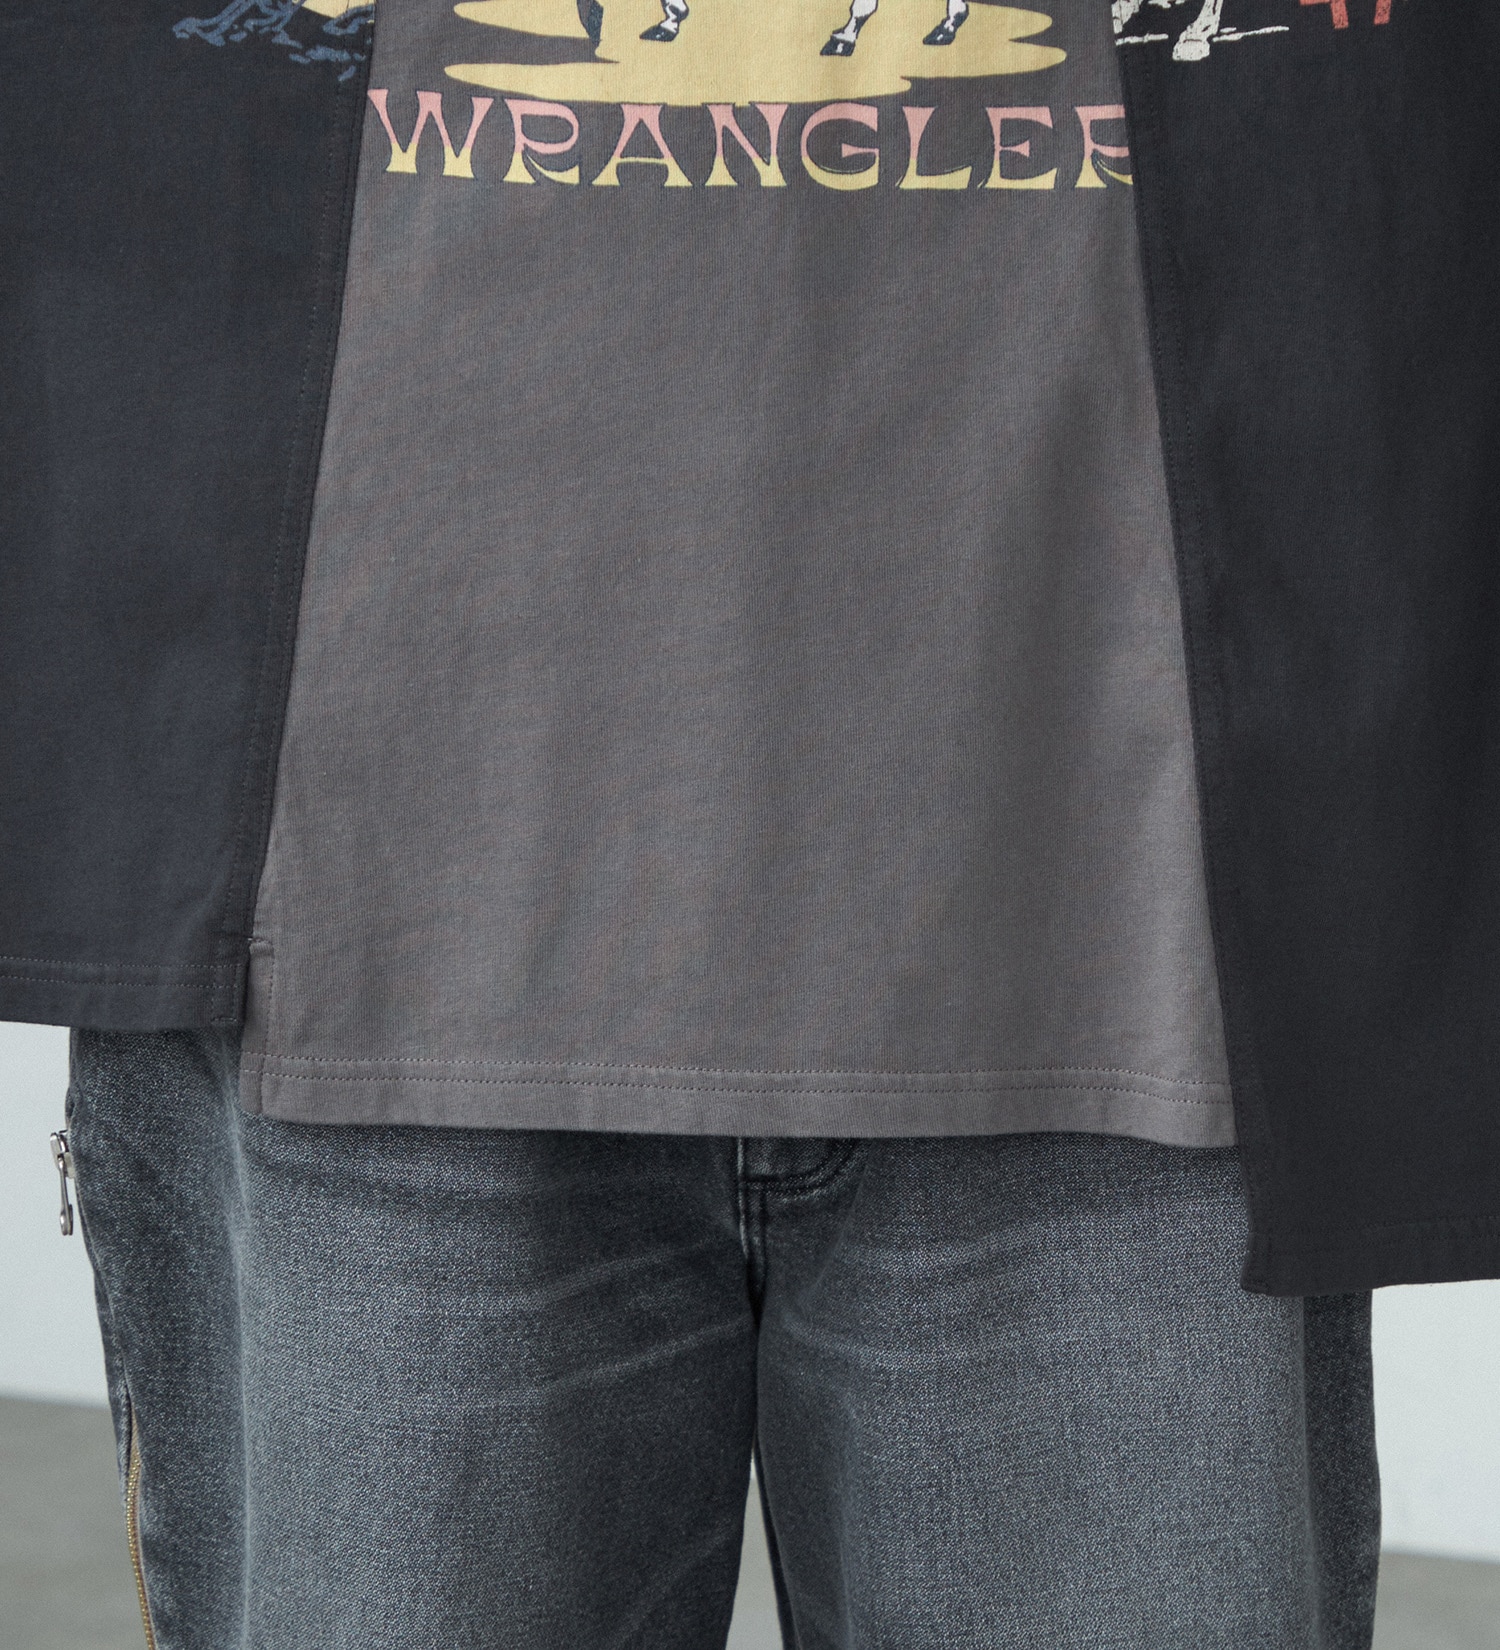 Wrangler(ラングラー)のリメイク ショートスリーブTee|トップス/Tシャツ/カットソー/メンズ|チャコールグレー